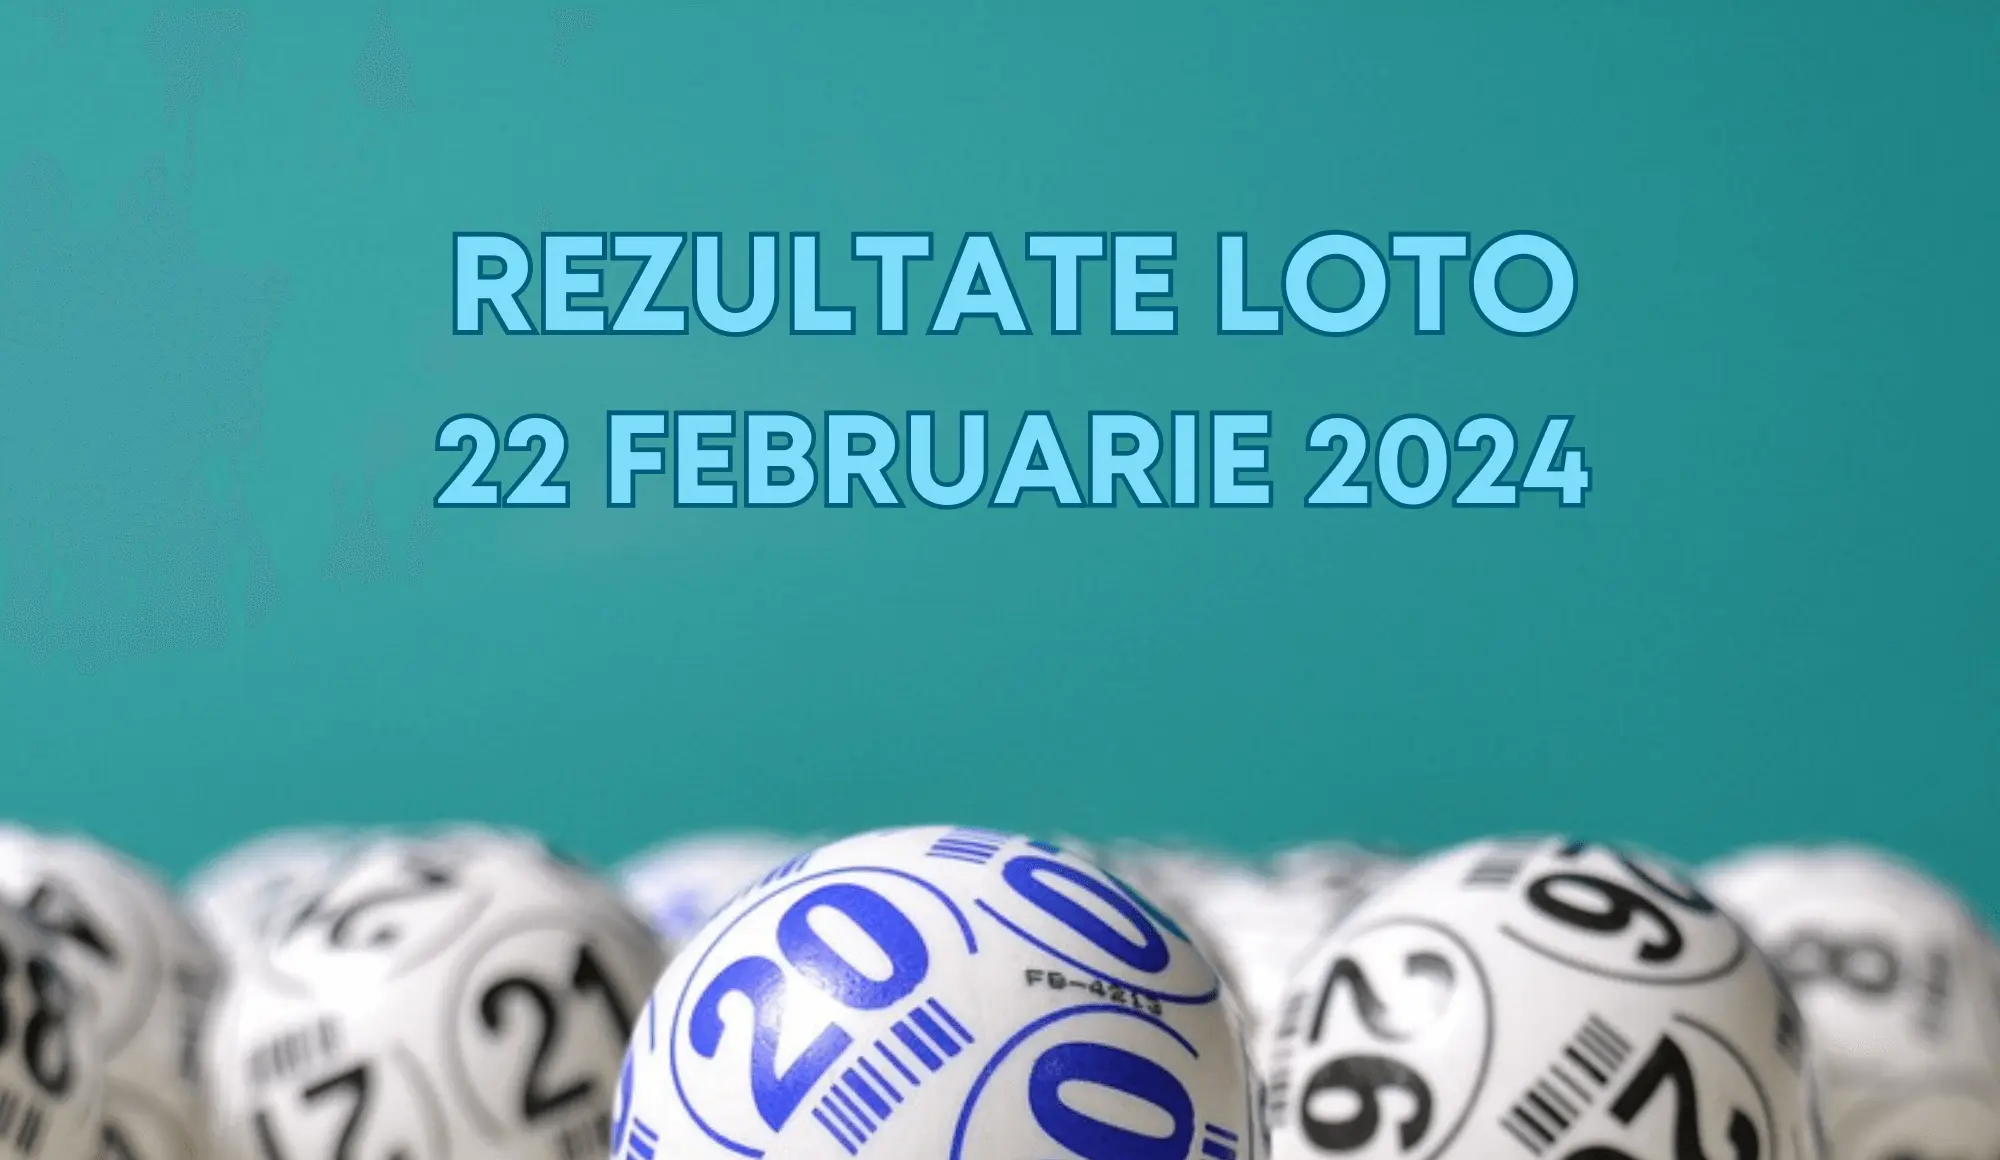 Rezultate Loto 22 februarie 2024 – Loto 649, Loto 540, Joker și Noroc